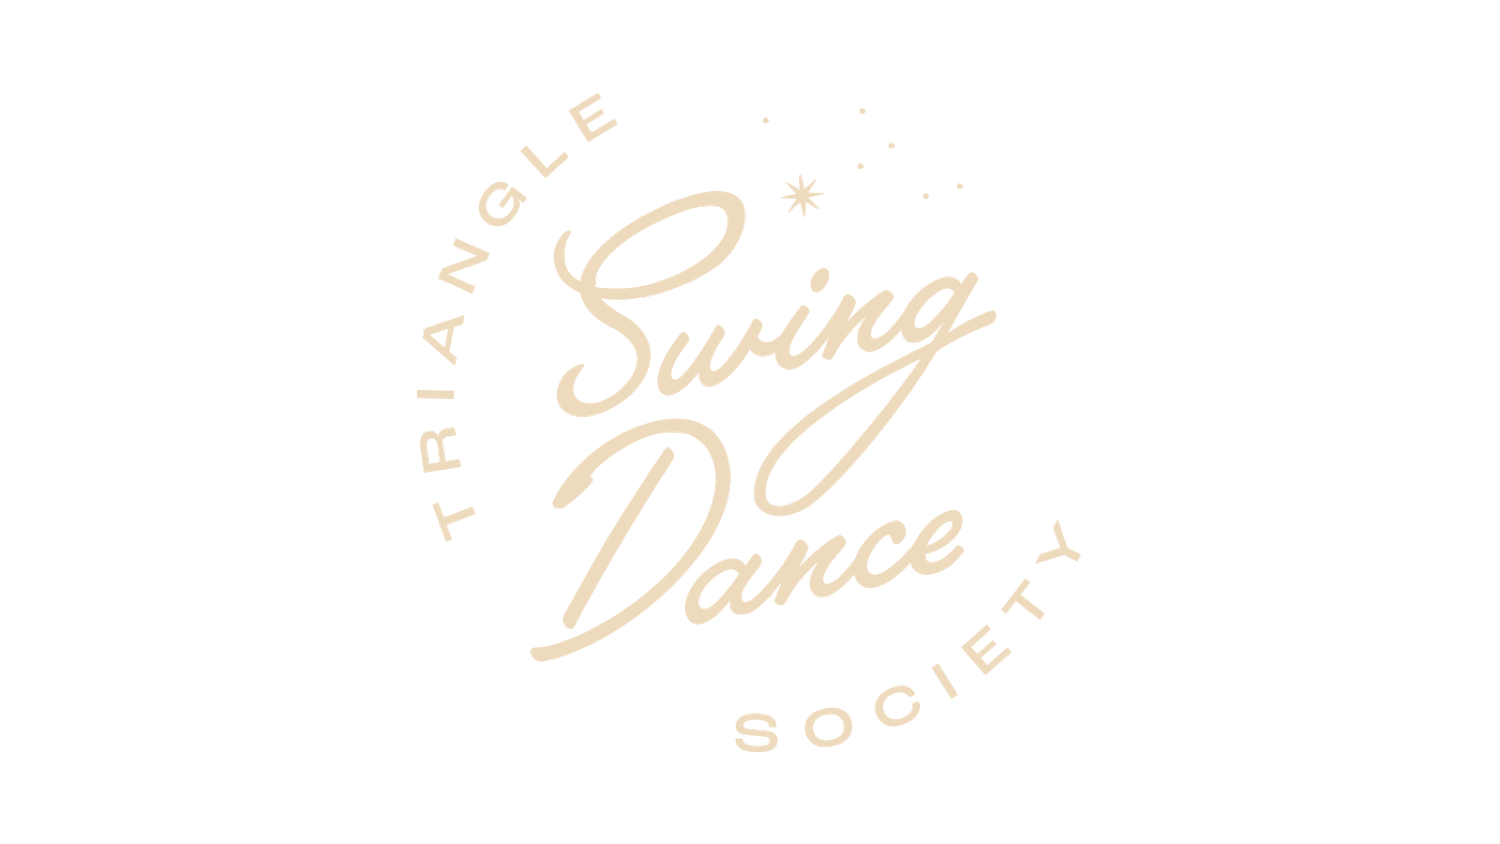 Triangle Swing Dance Society